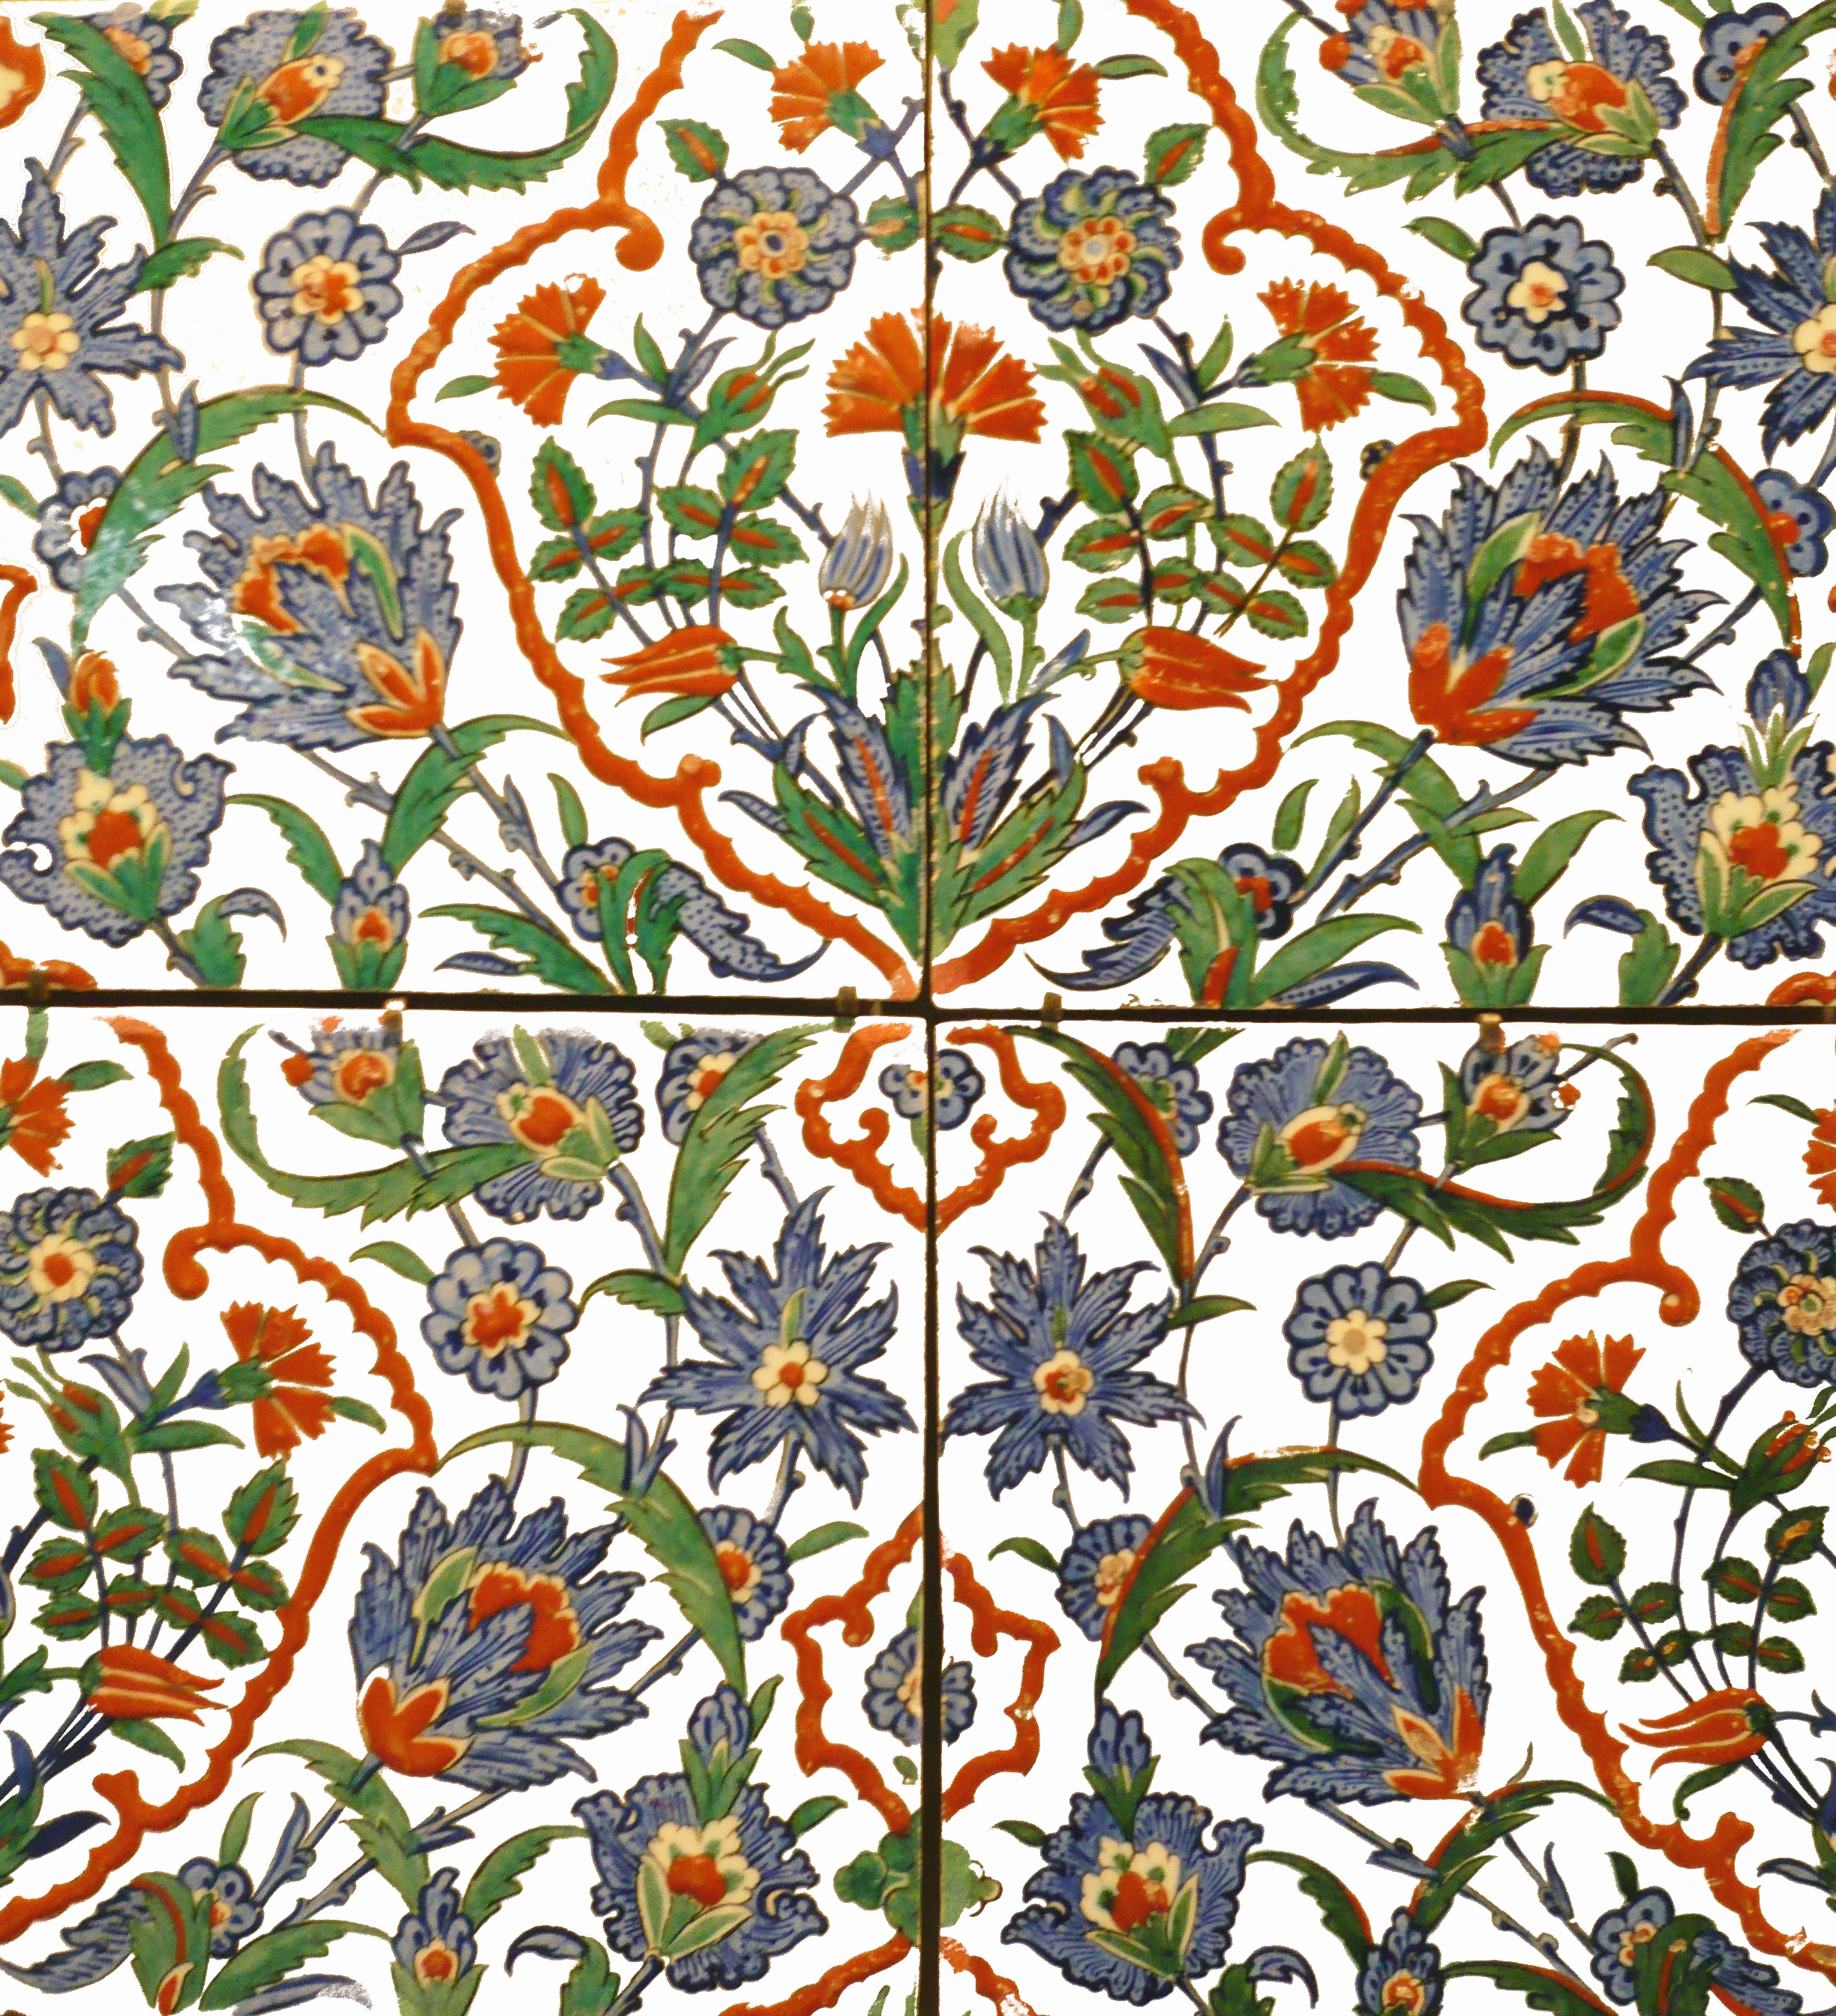 Azulejos cerámicos otomanos by Artista anónimo  - siglo XVI - 50 x 50 cm Sèvres, Cité de la céramique